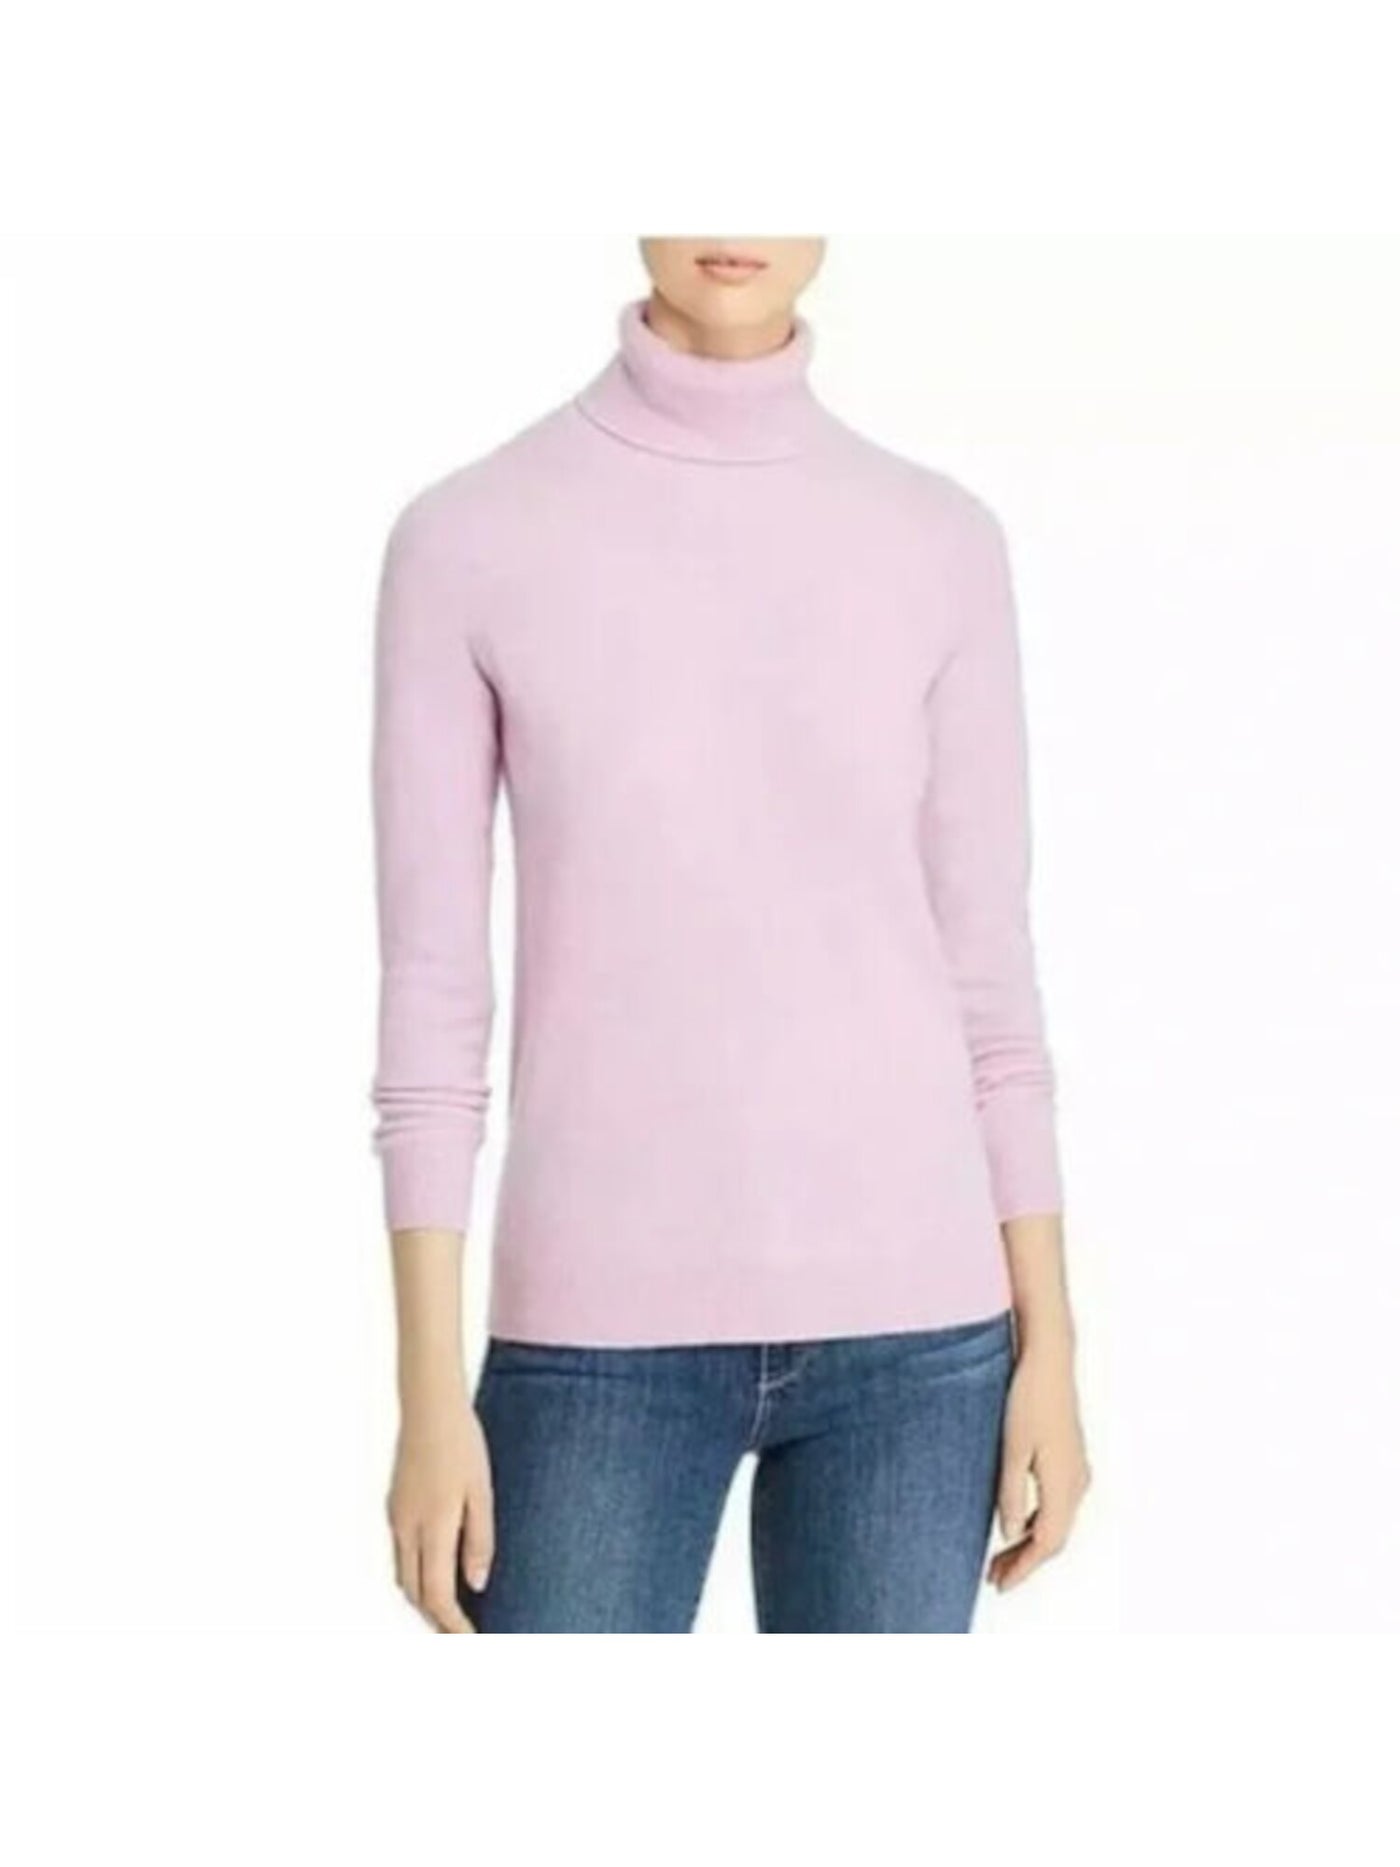 Designer Brand Womens Pink Long Sleeve Turtle Neck Sweater XL